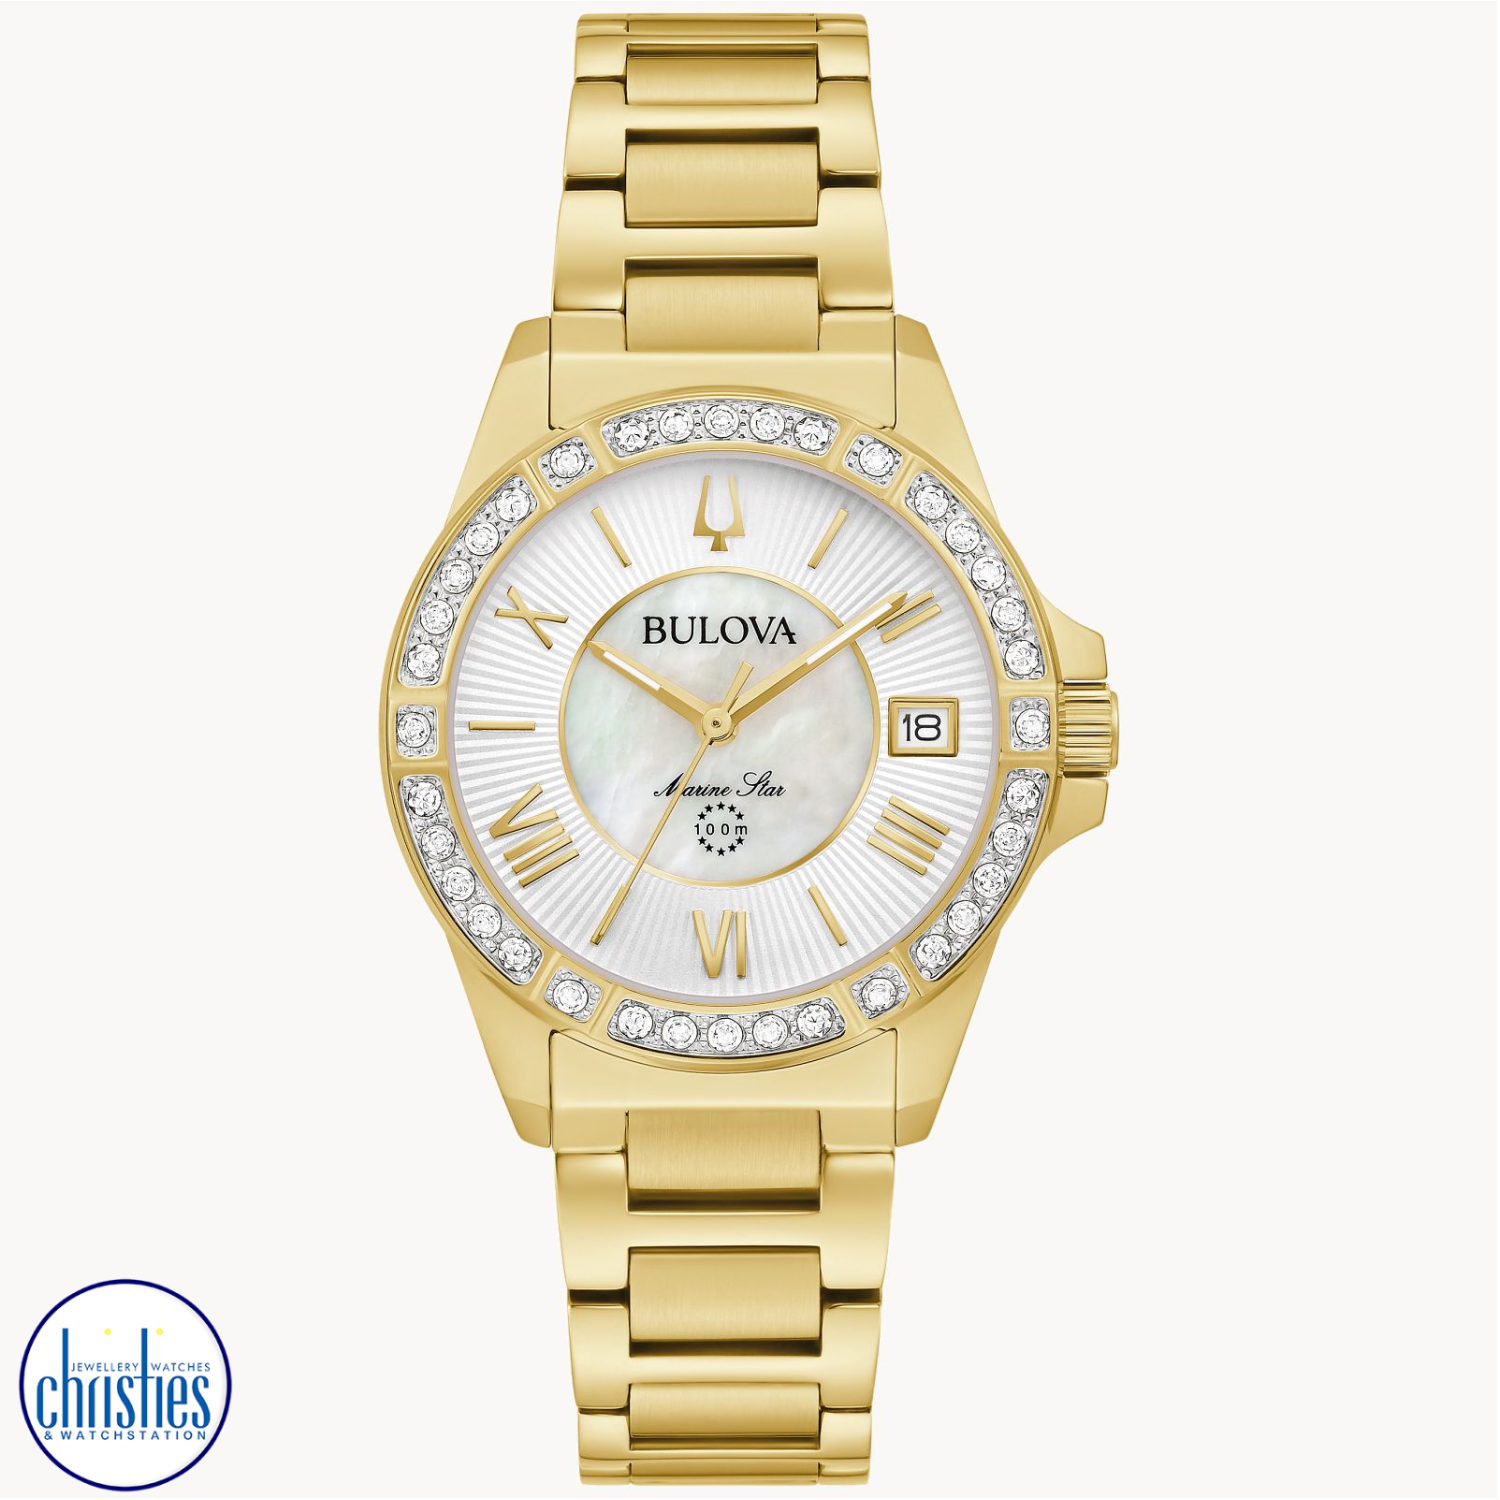 98R294 Bulova Womens Marine Star Diamond Watch. Add a touch of elegance to your look with the Bulova 98r294 Marine Star women's watch.